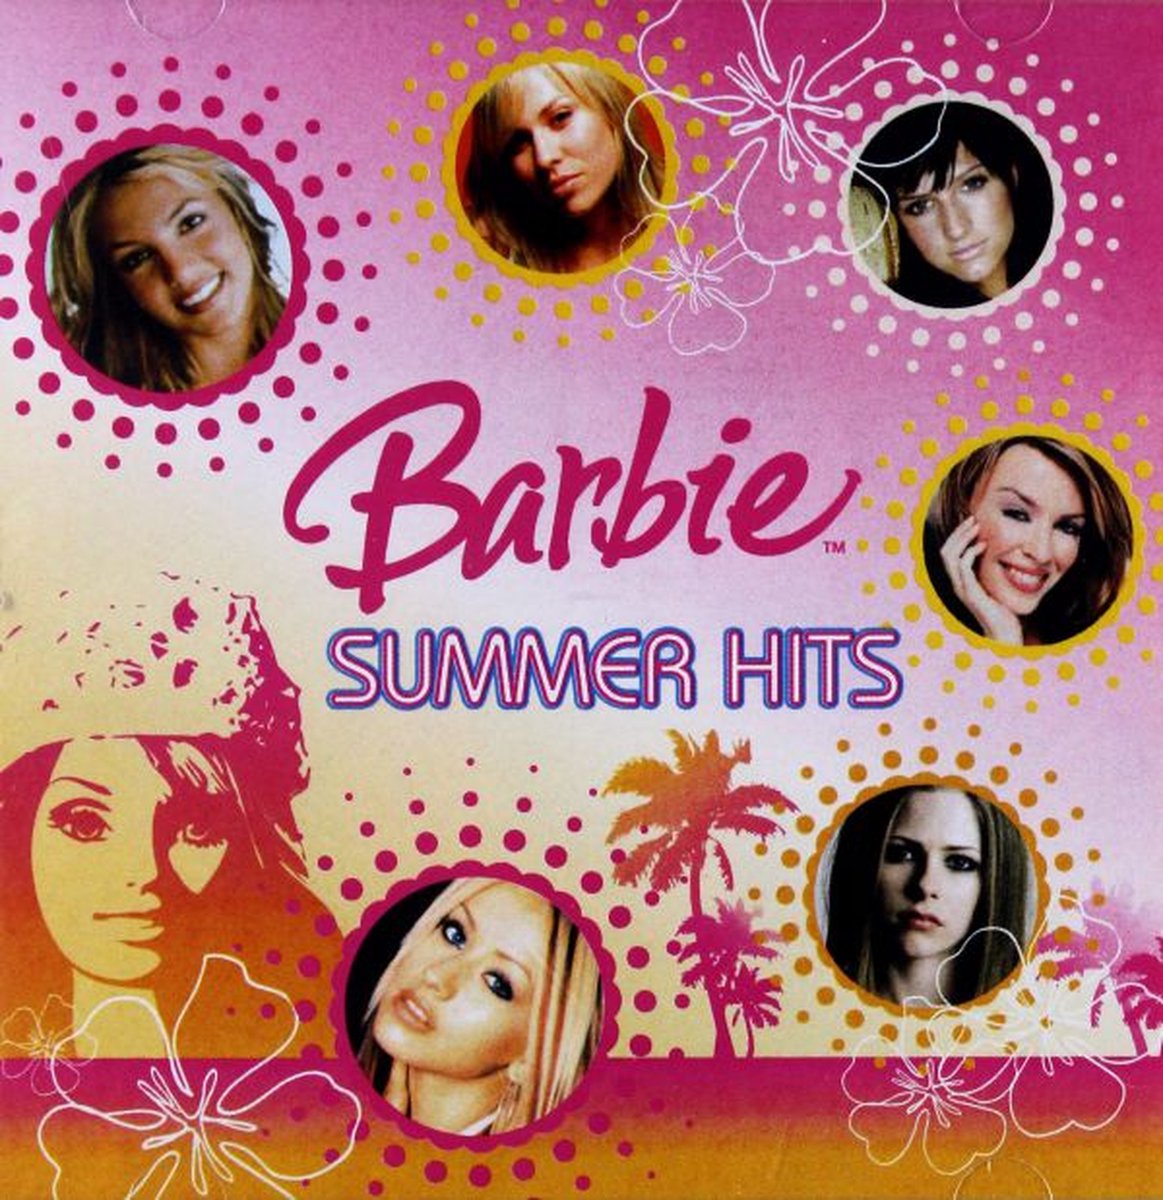 Barbie Summer Hits - various artists